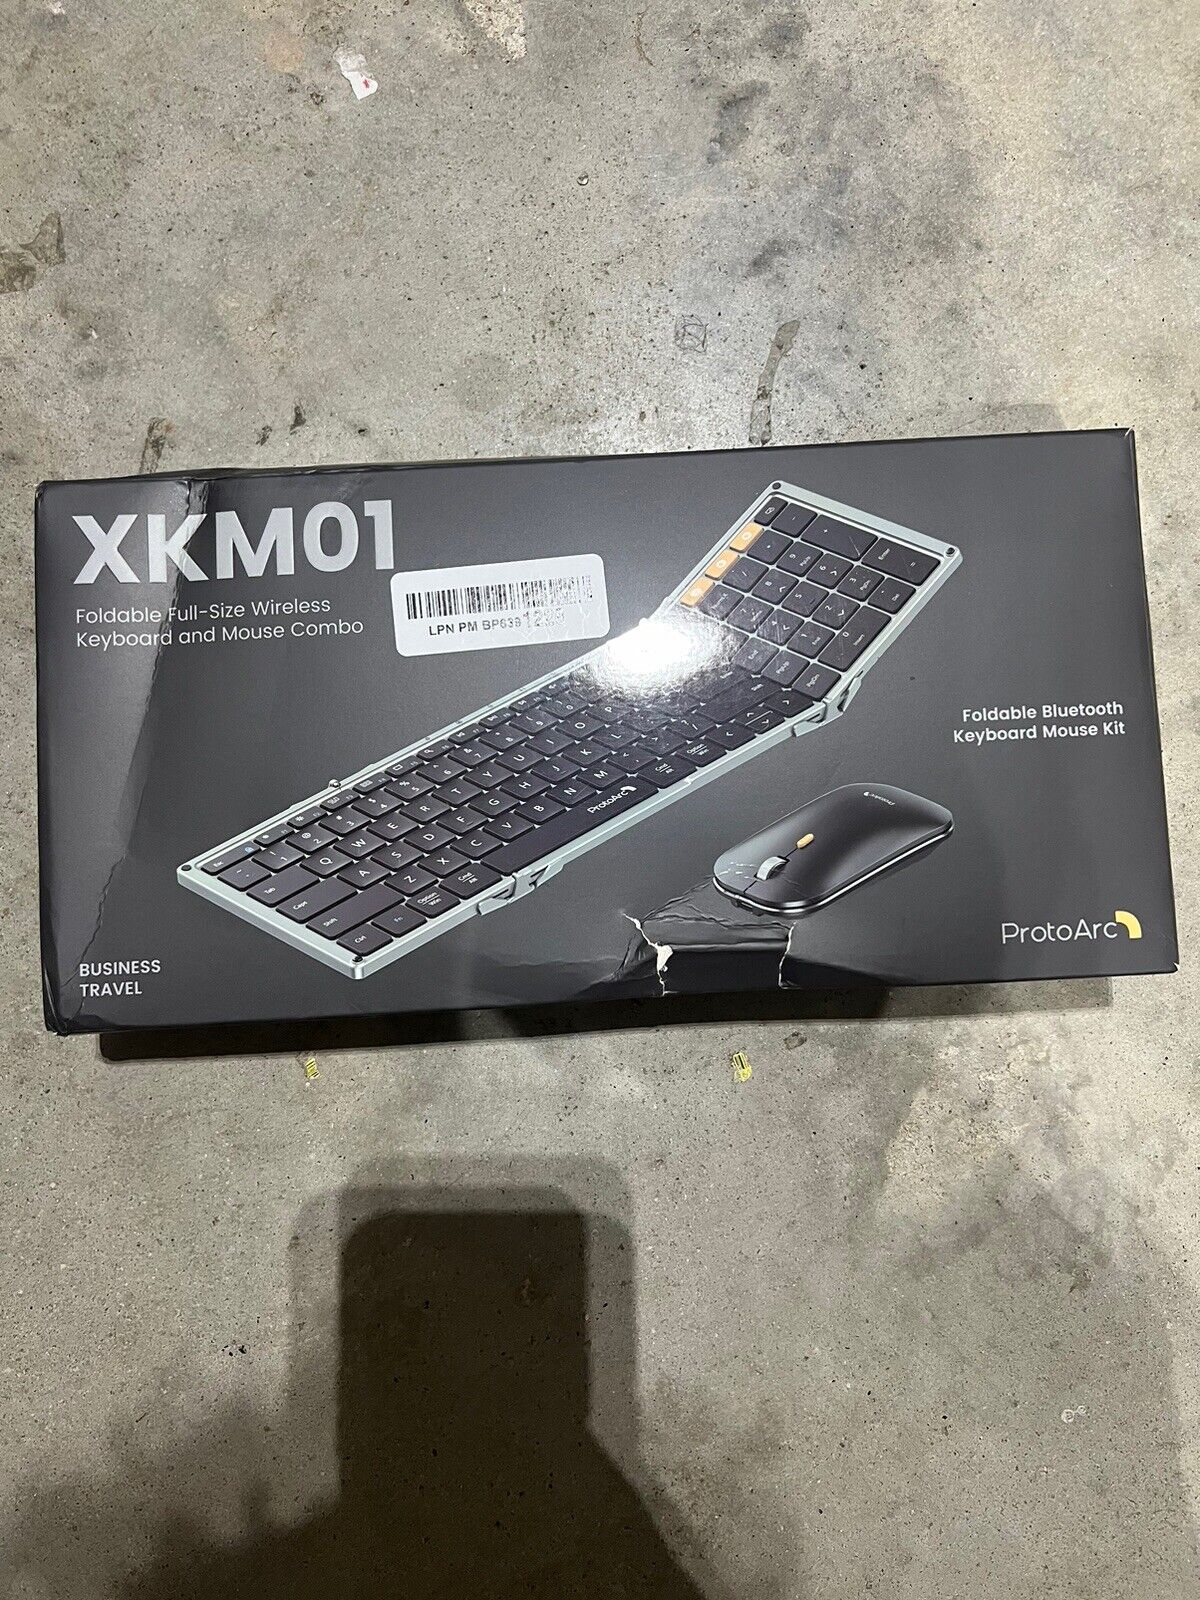 ProtoArc Foldable Keyboard and Mouse, XKM01 Folding Bluetooth Keyboard Mouse